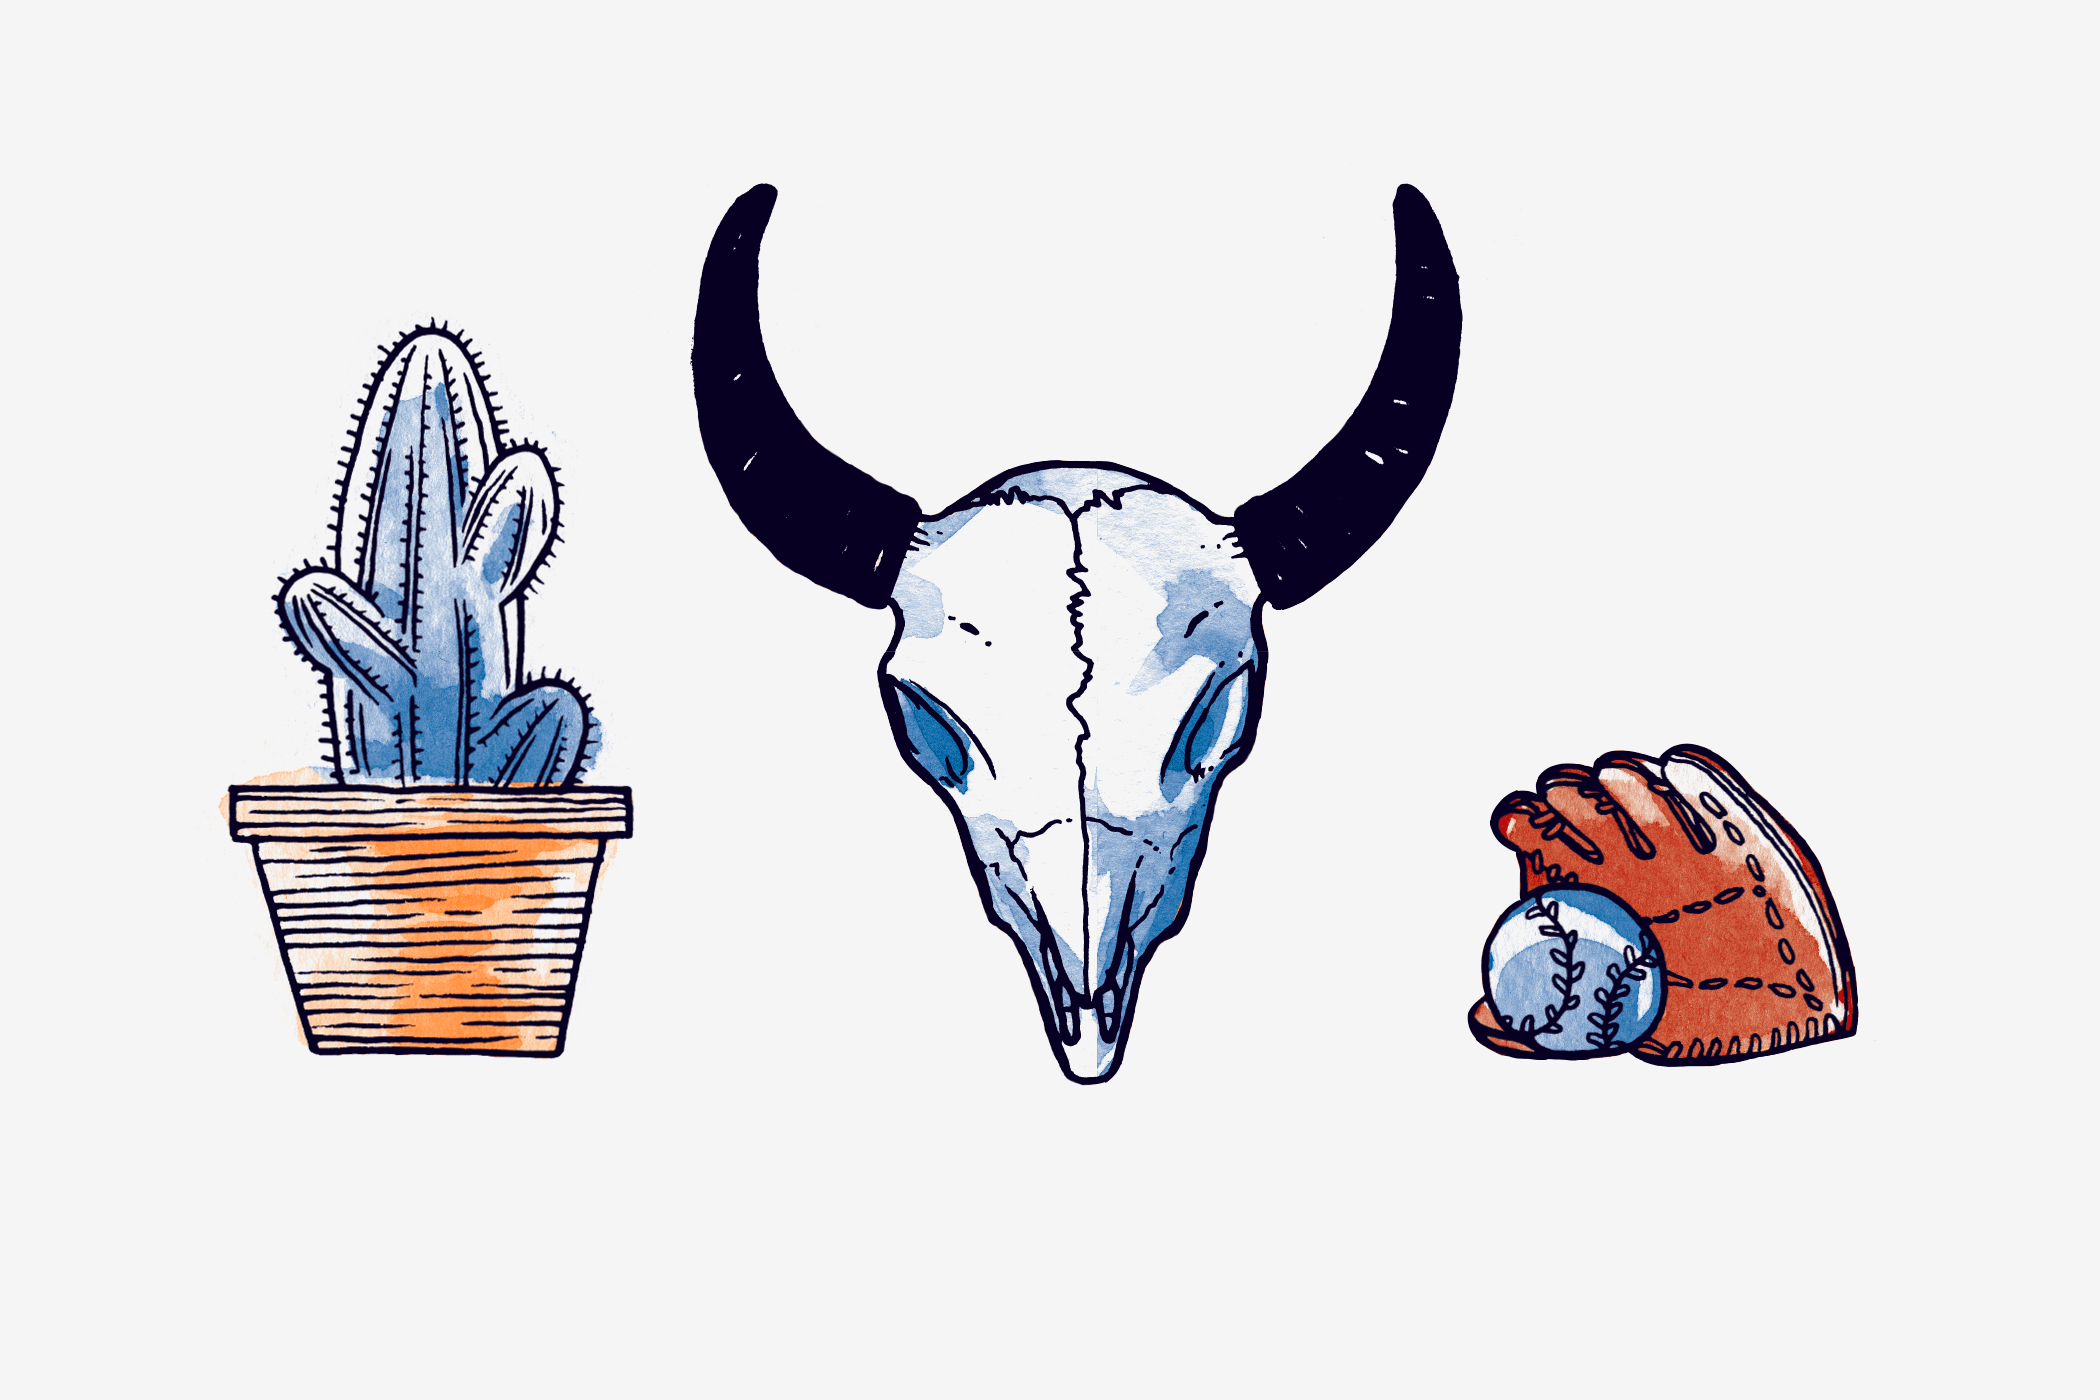 Viacom phone room illustrations - cactus, skull, baseball gloves